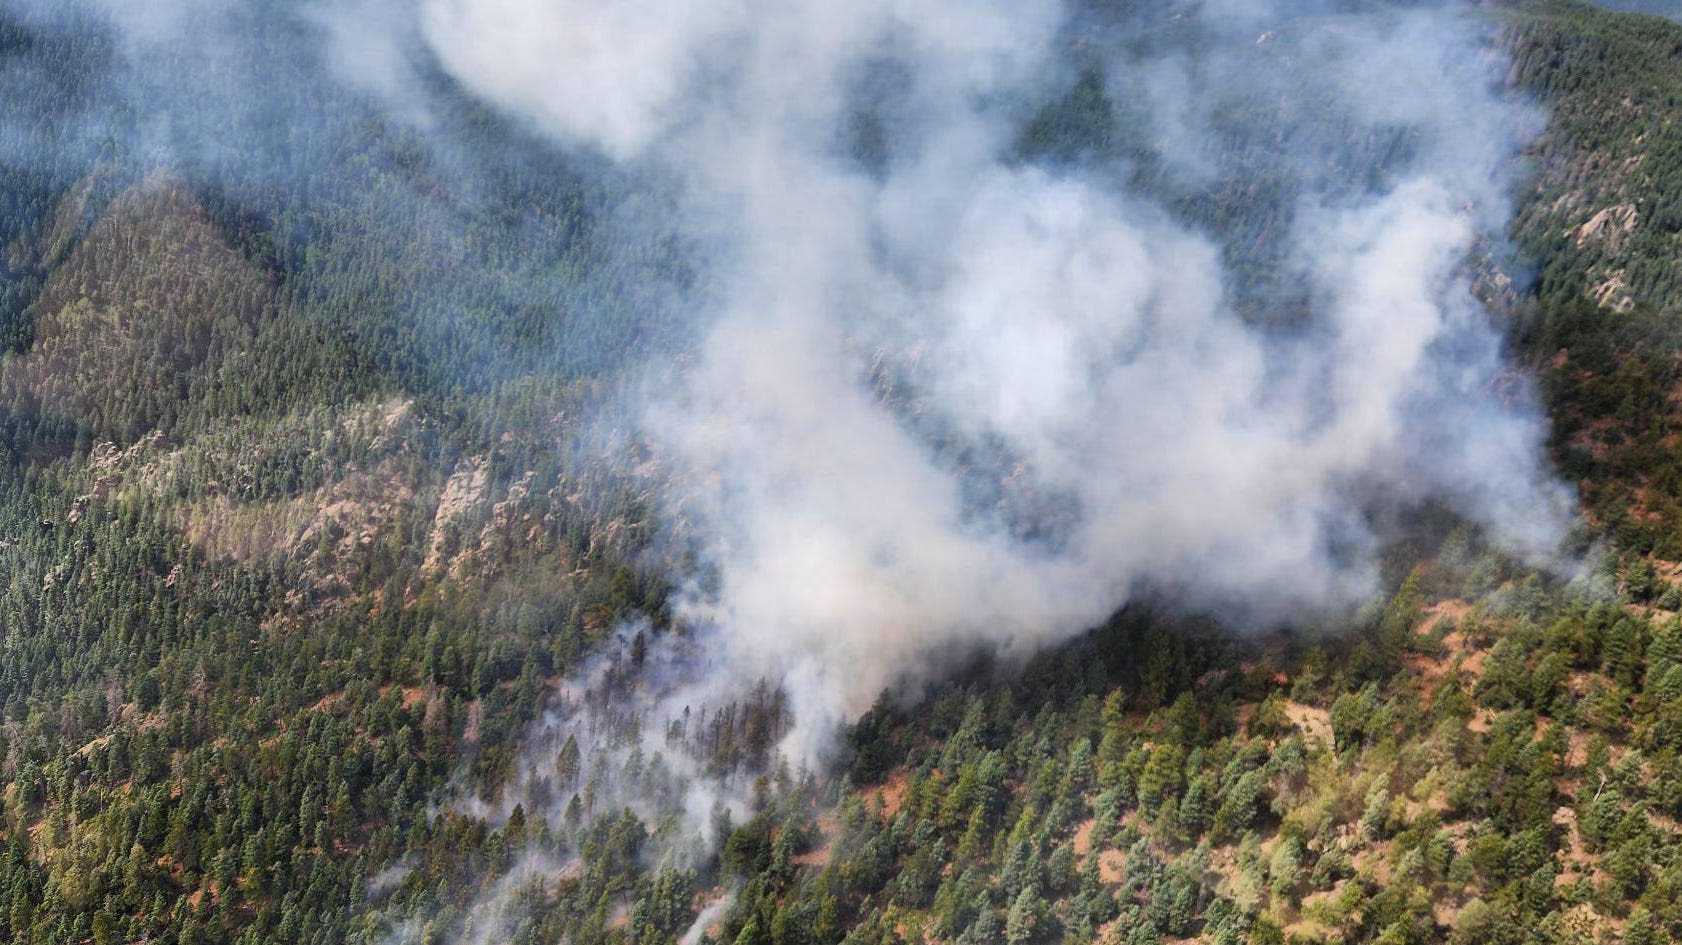 Oak Ridge Fire: Colorado blaze 5% contained at 1,190 acres following weekend efforts